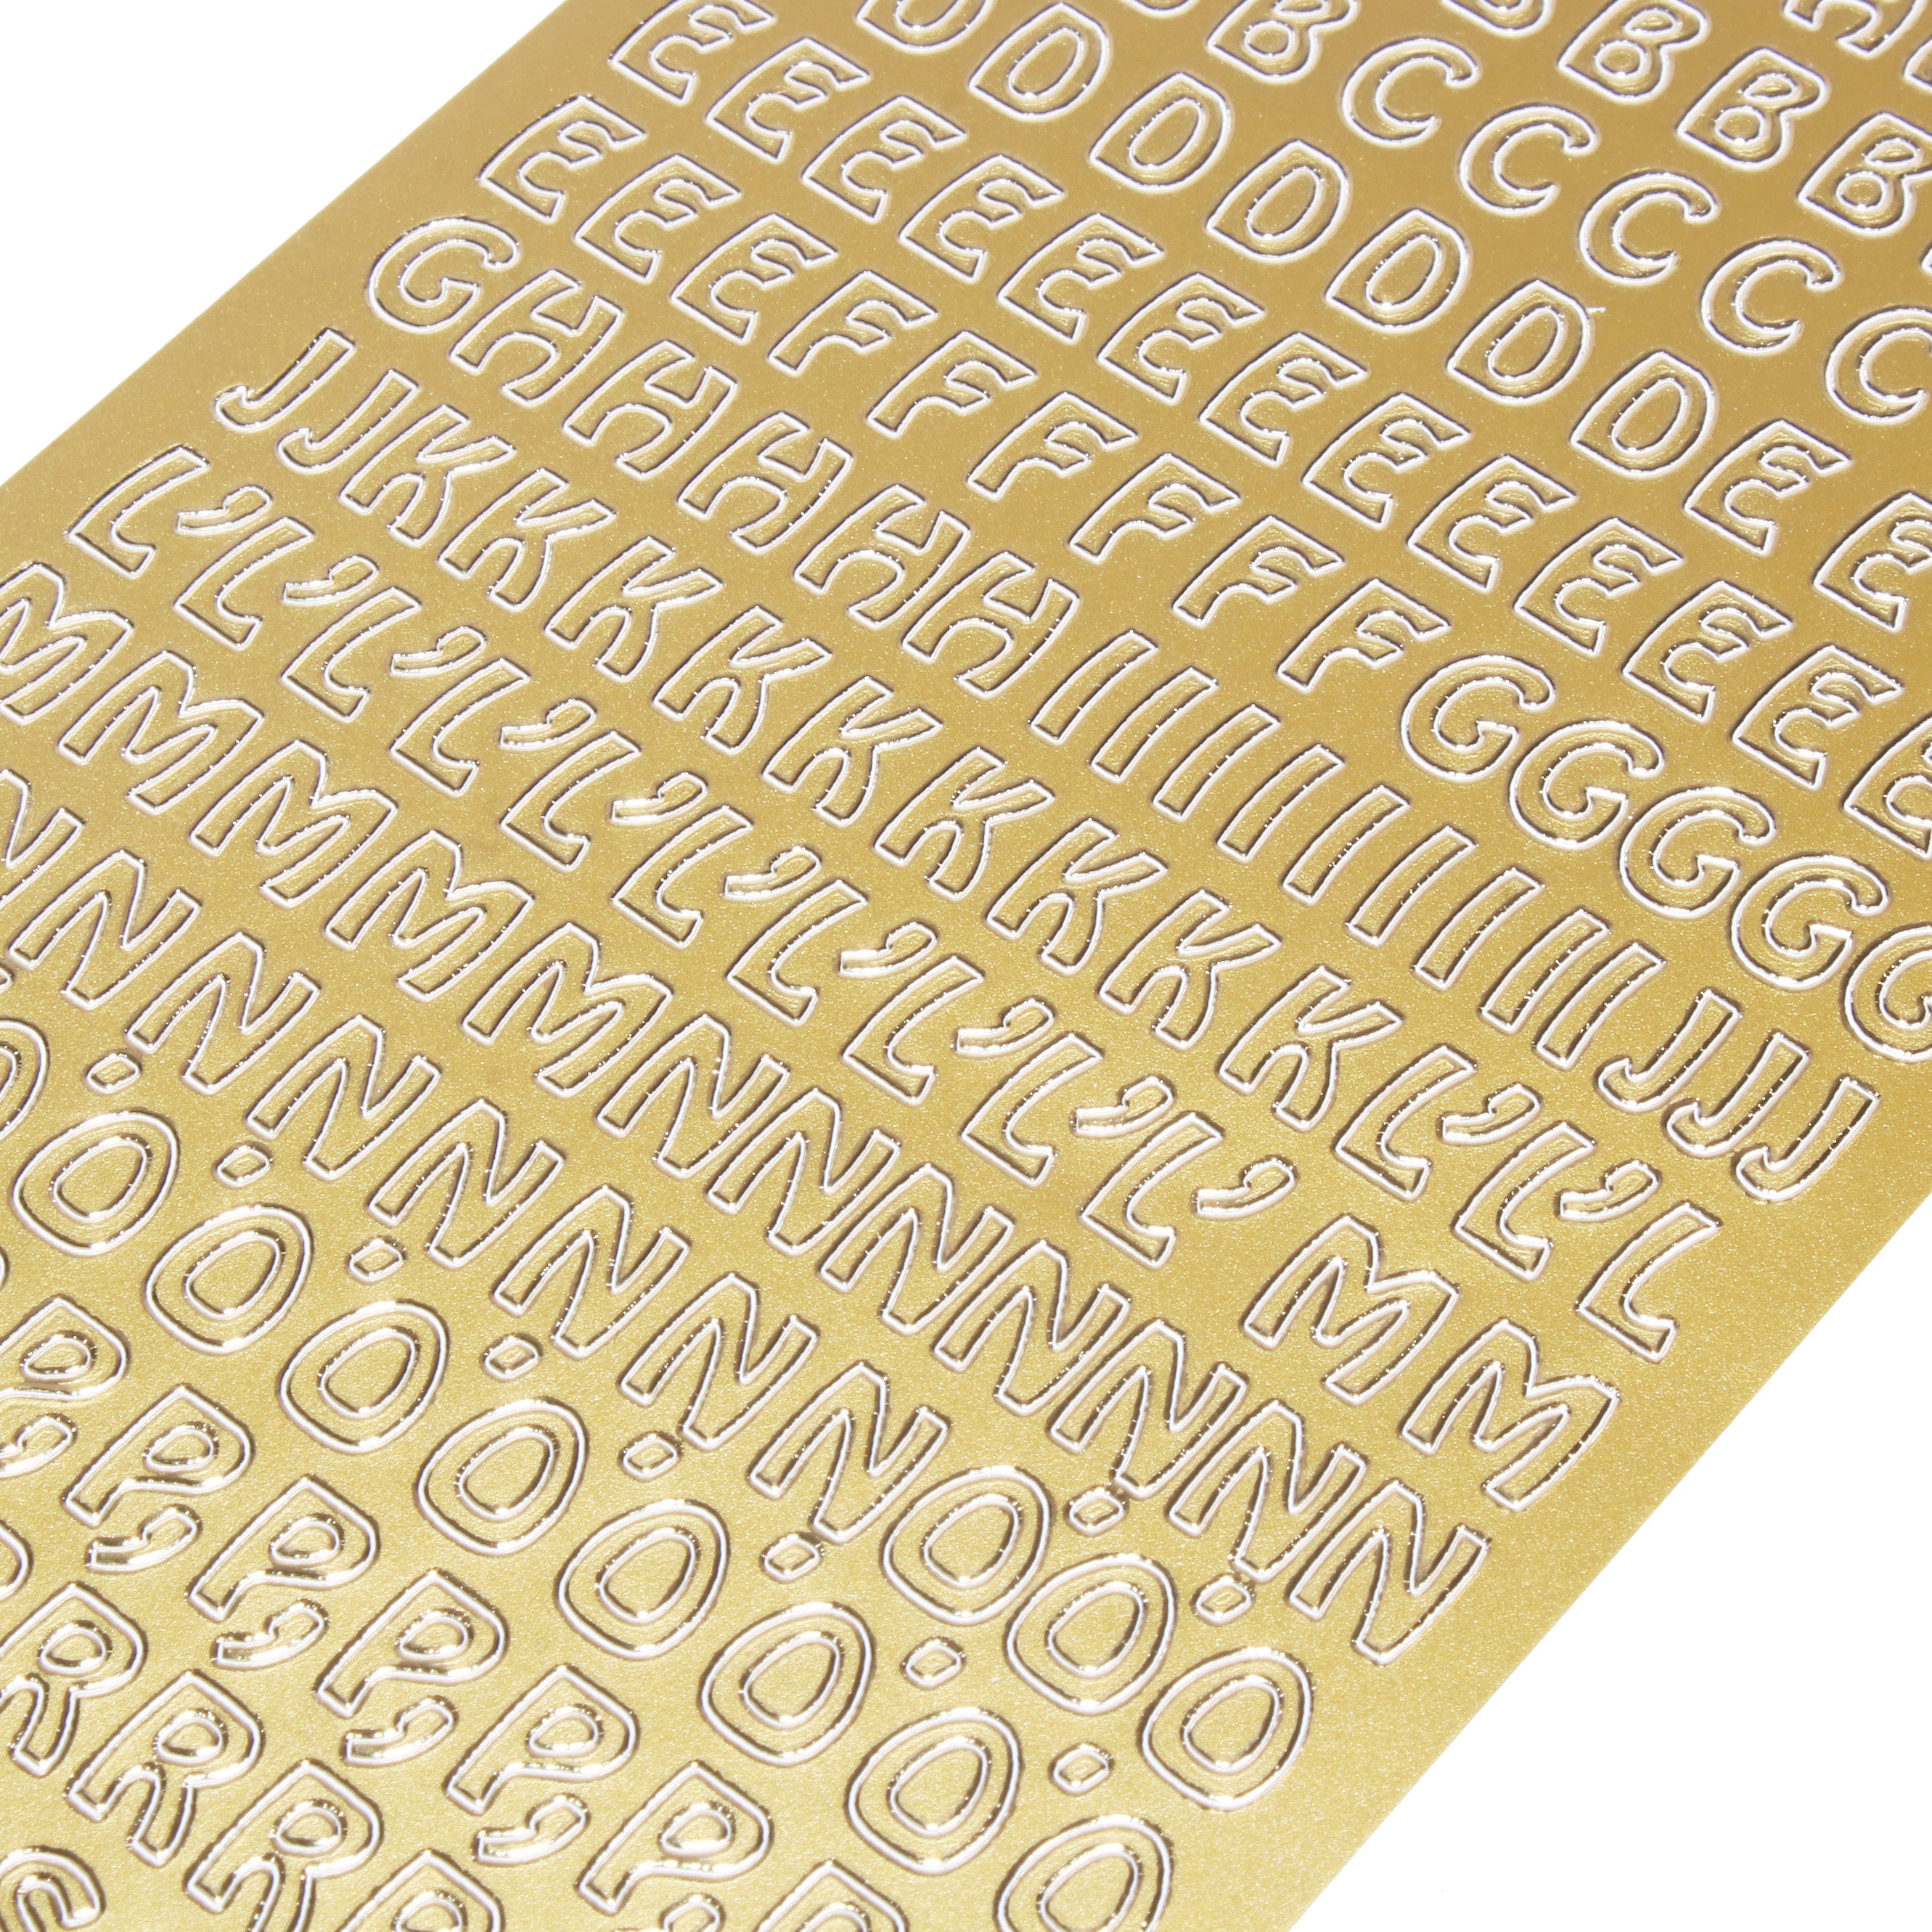 Foil Peel Off Sticker Alphabet Capital Letters Golden 10 X 23cm 1Sheet